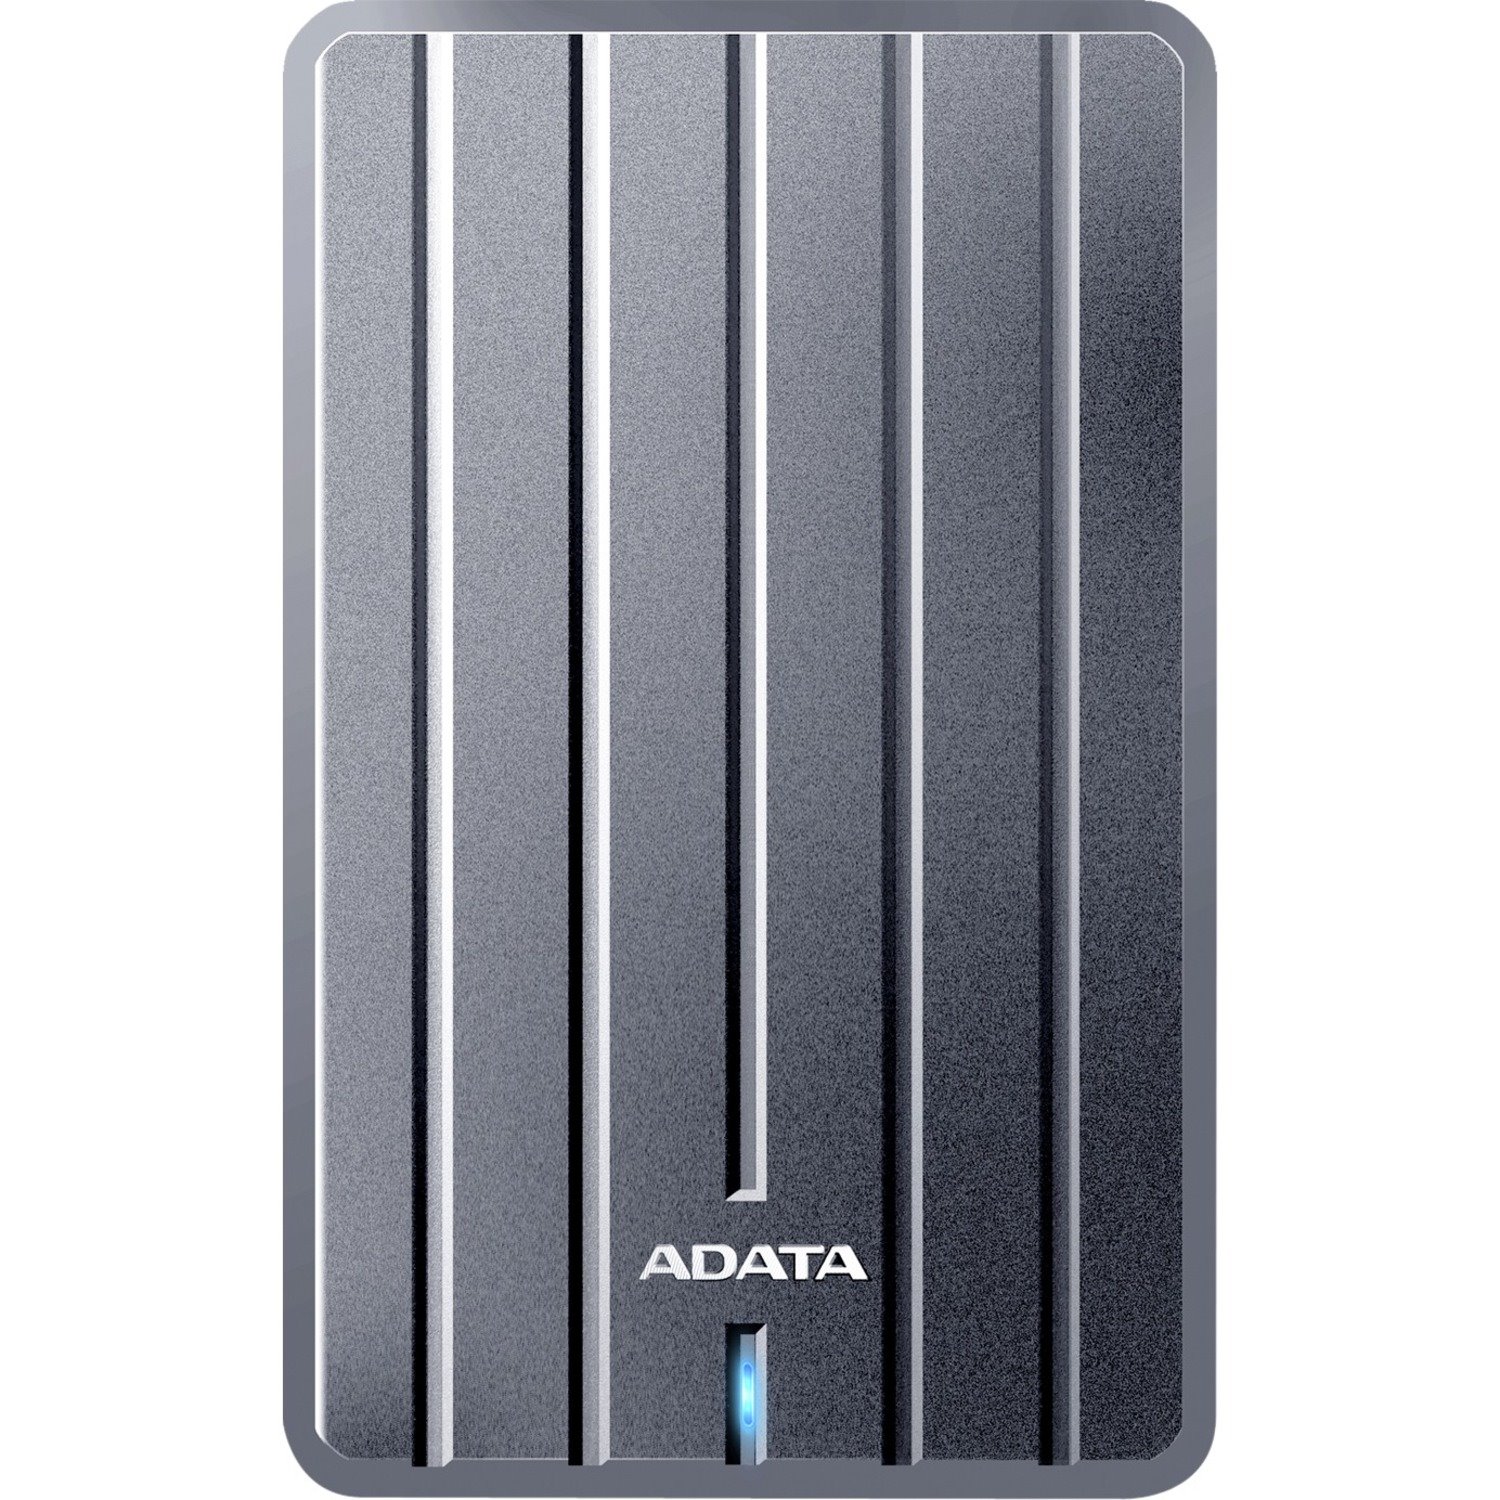 Adata HC660 1 TB Portable Hard Drive - 2.5" External - Grey